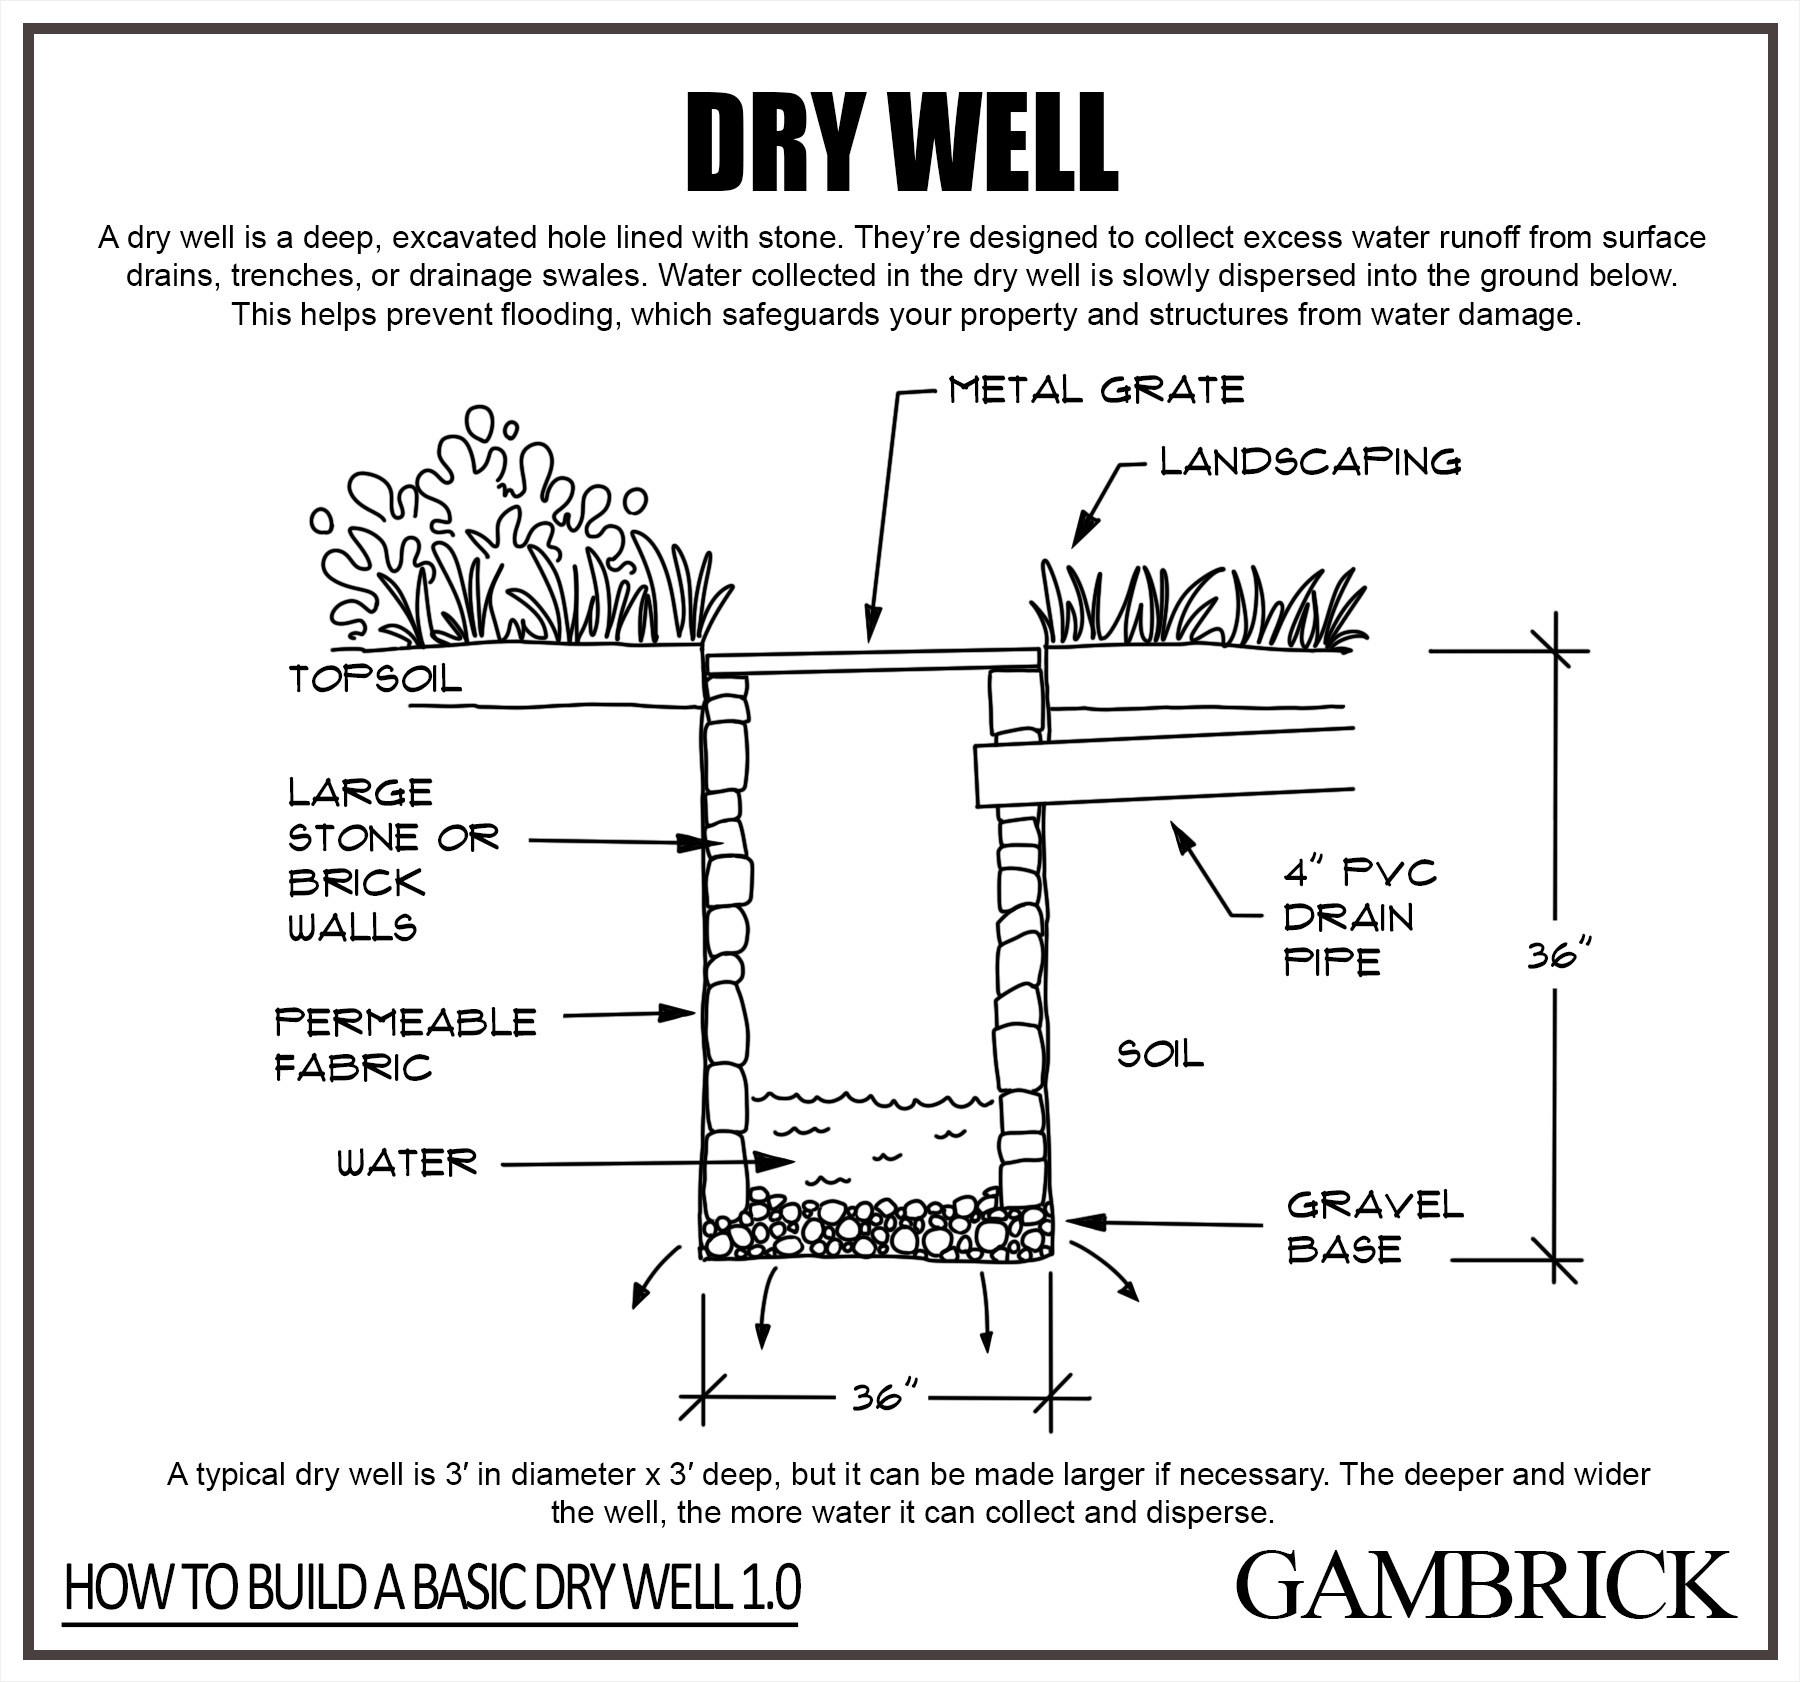 French drain vs. drywell diagram 2.0